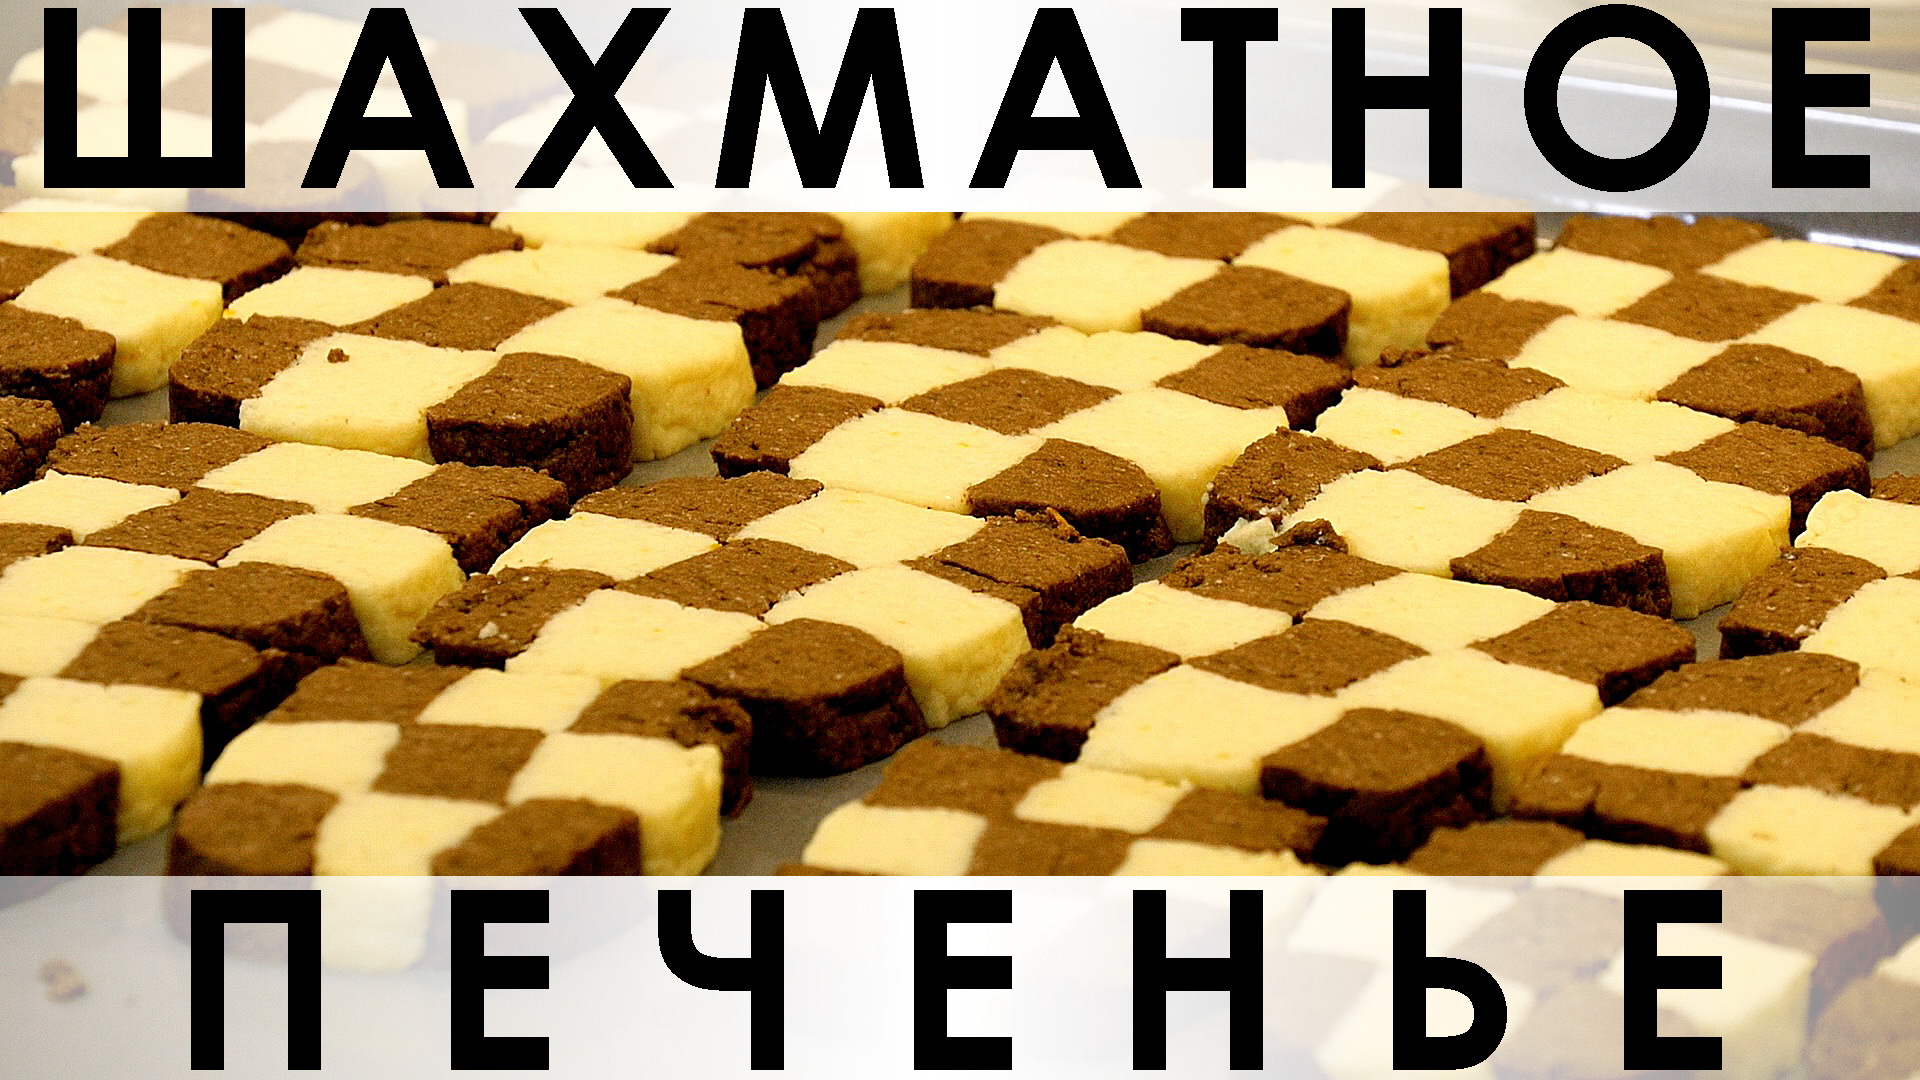 Печенье Шахматное